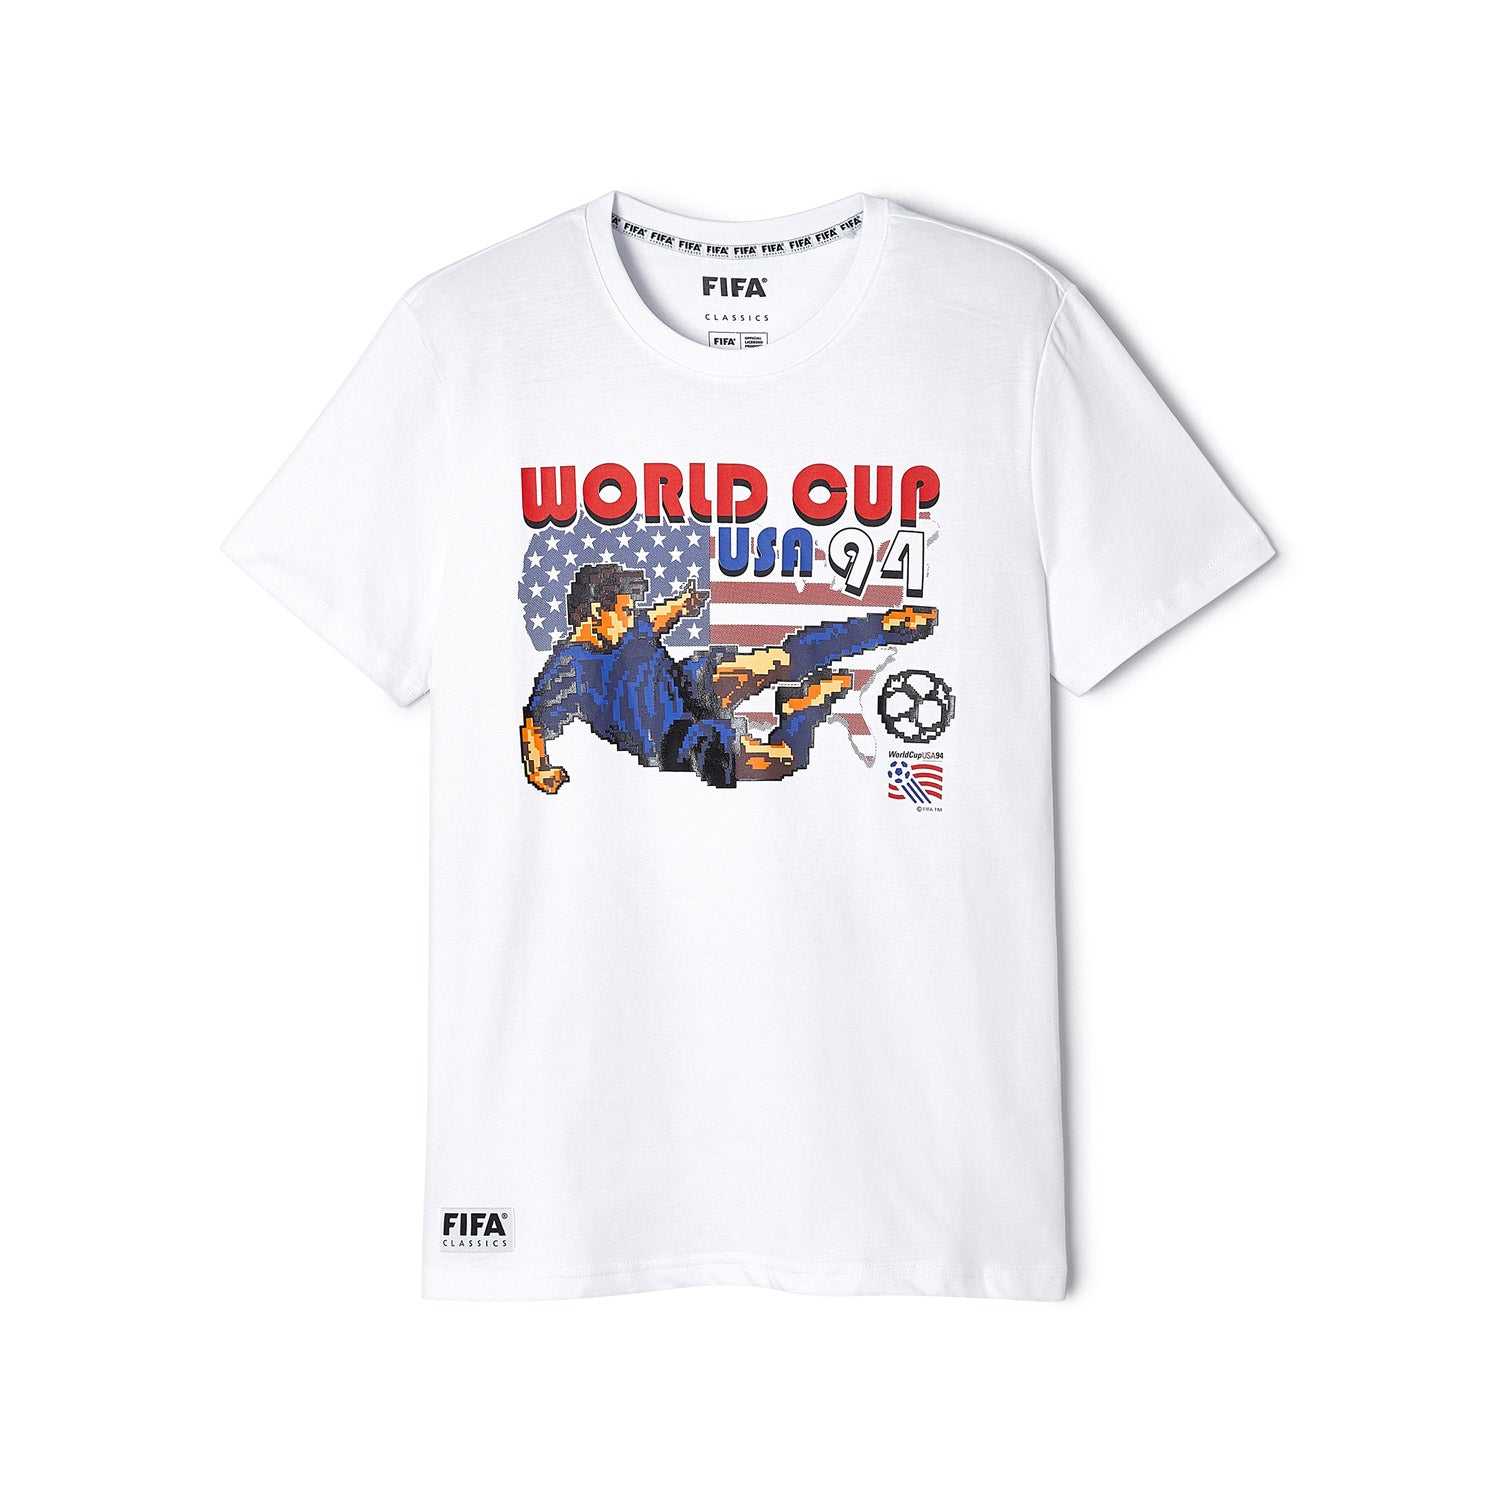 FIFA Rewind USA '94 8-bit T-Shirt - Mens